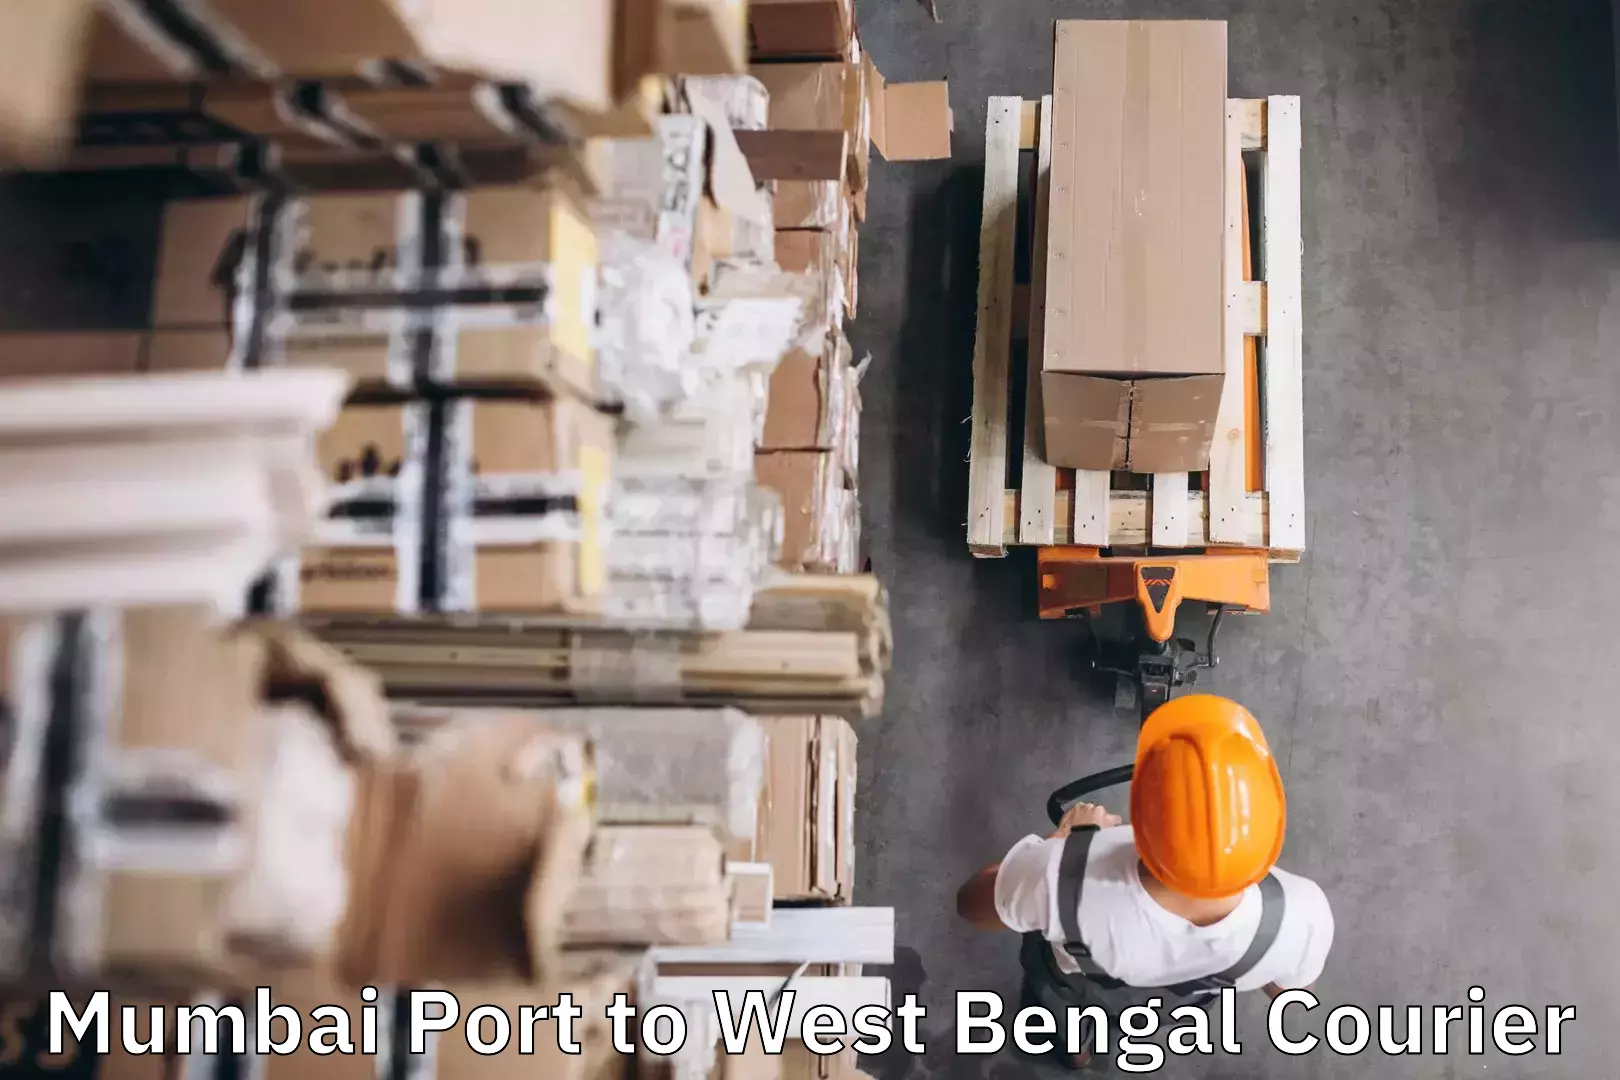 Luggage transport company Mumbai Port to Bishnupur